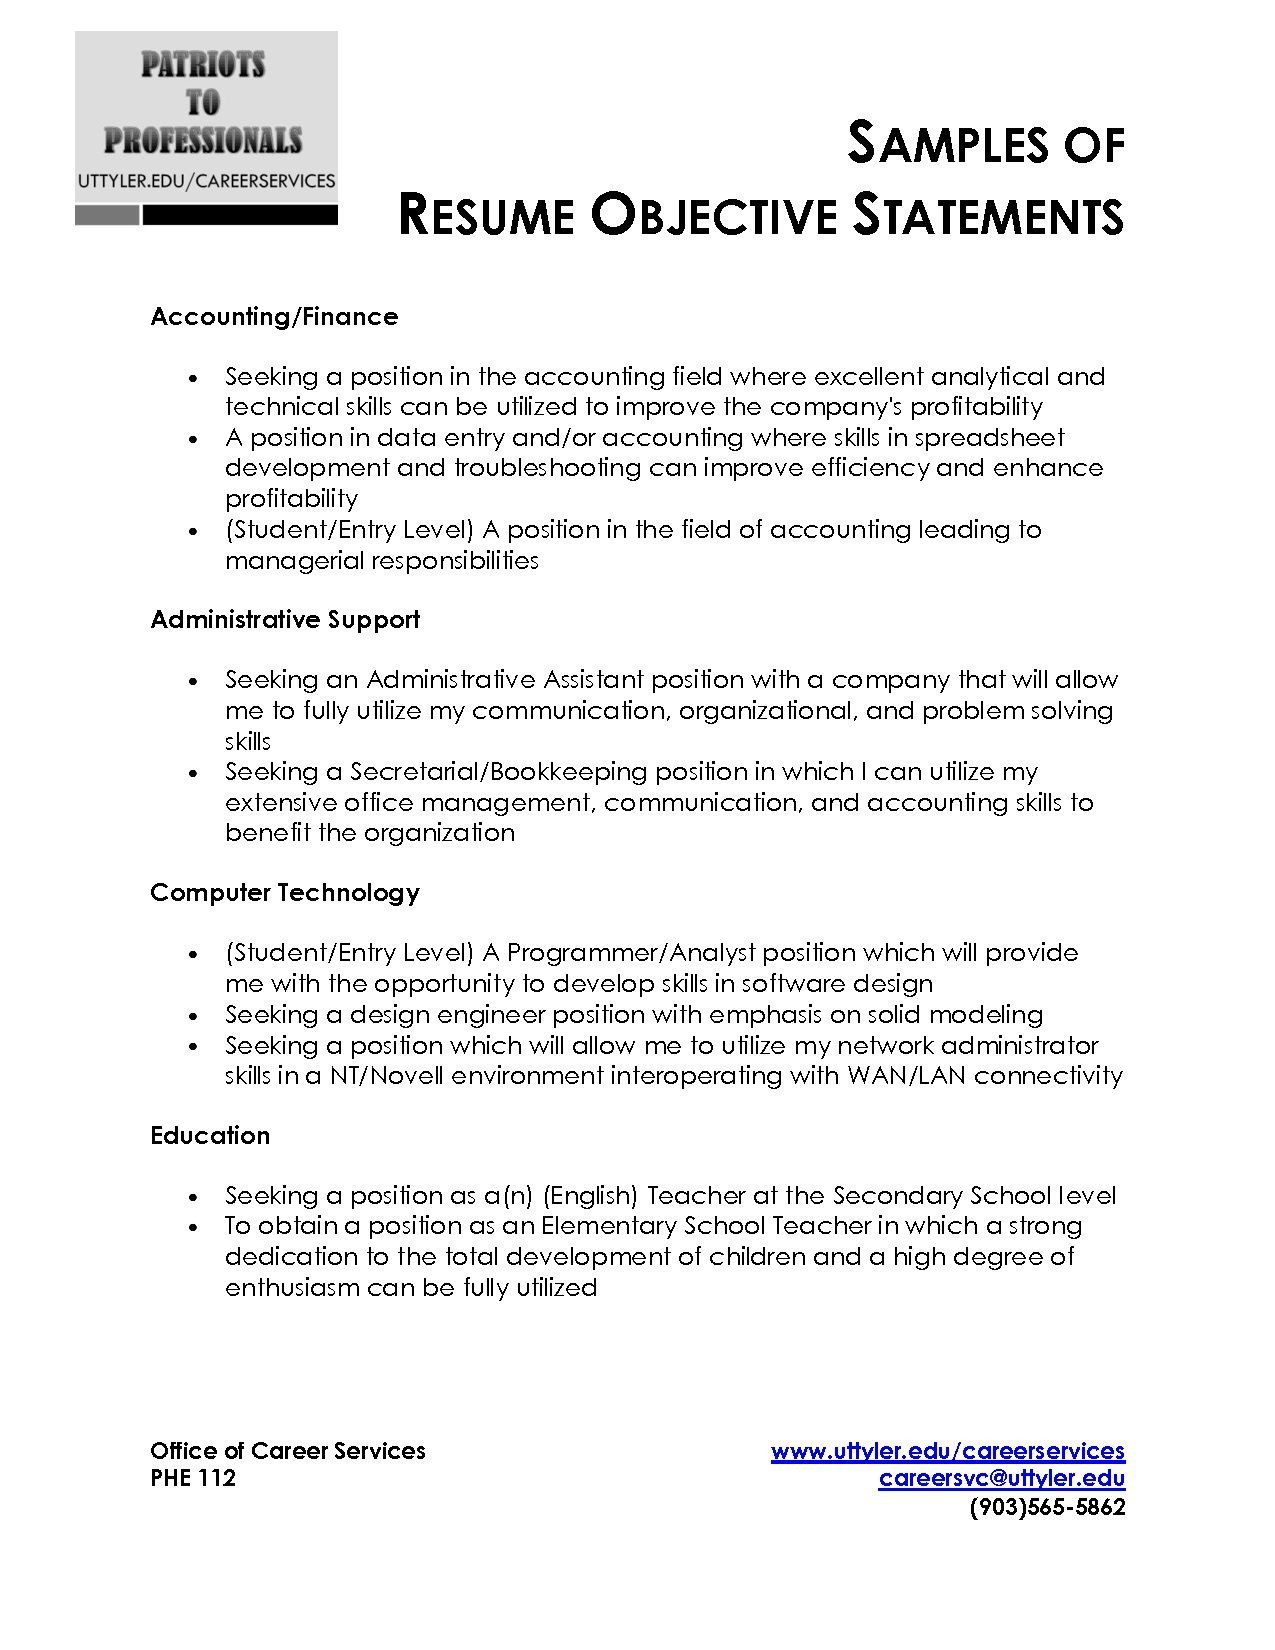 Sample Resume Objective Statements Entry Level Sample Resume Objective Statement Free Resume Templates Resume …